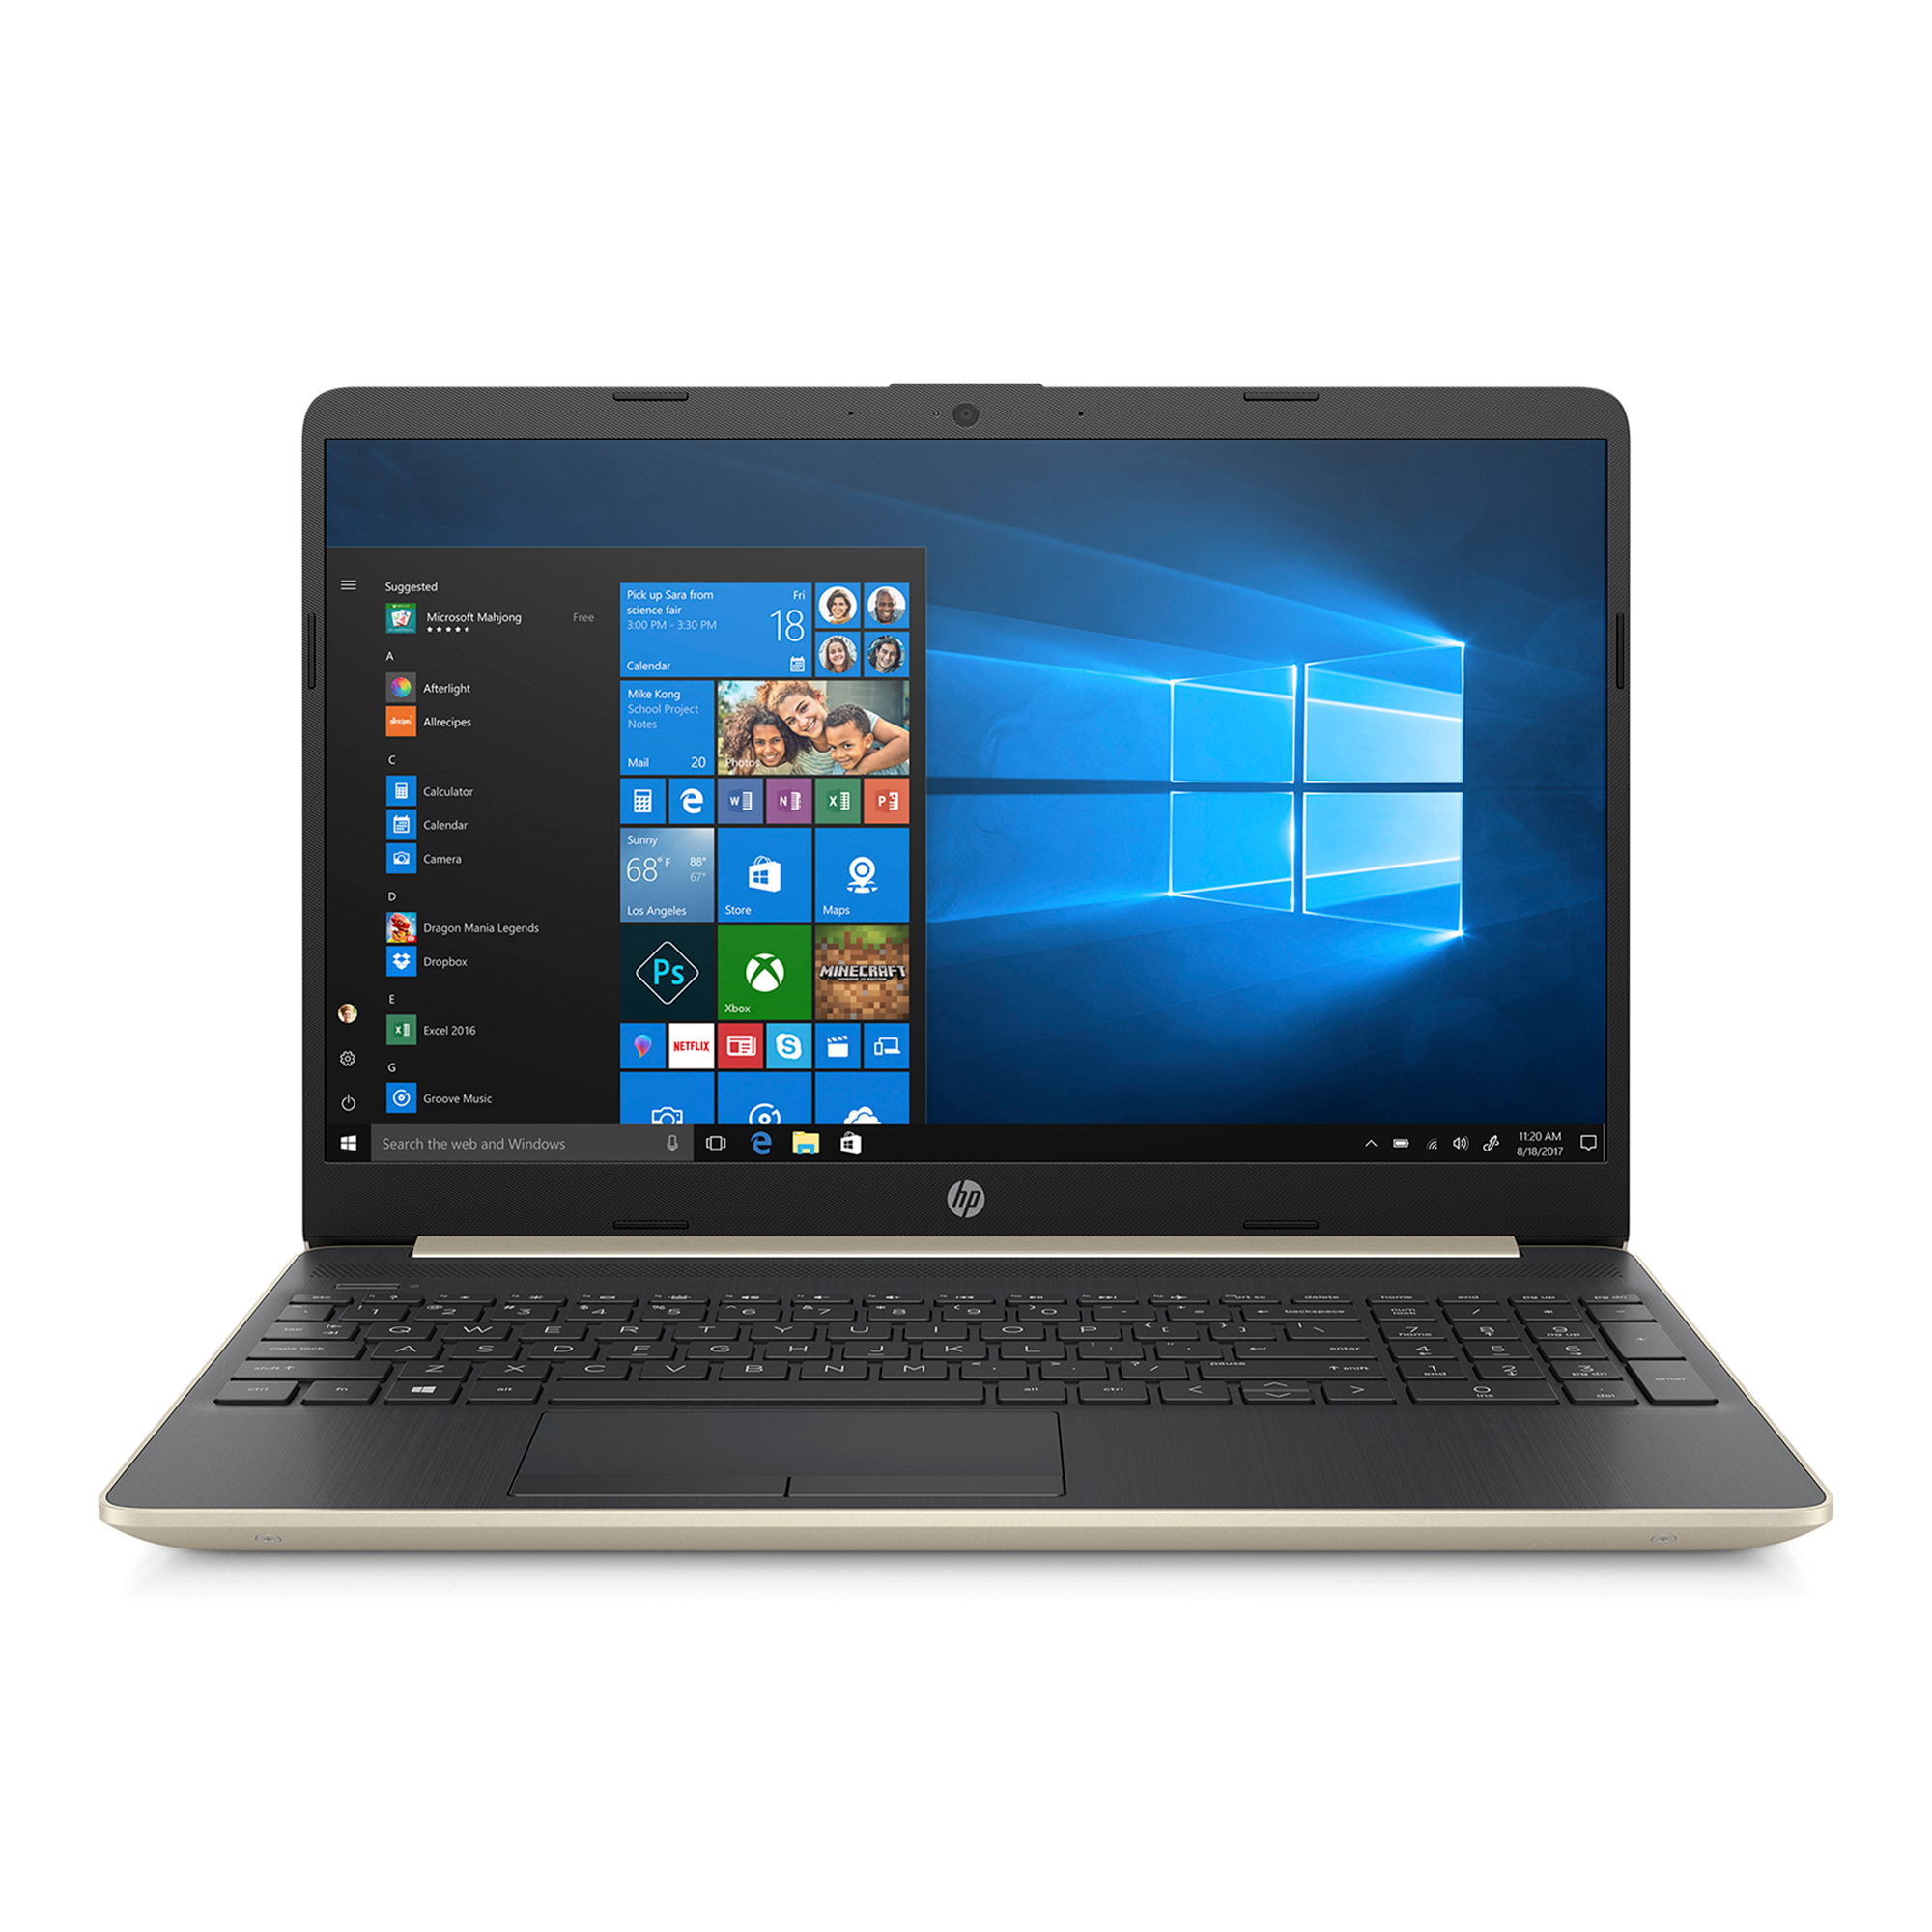 HP 15.6" HD Laptop, Intel Core i5-8265U, 8GB, 256GB SSD, Pale Gold, 15-dw0052wm - image 1 of 10